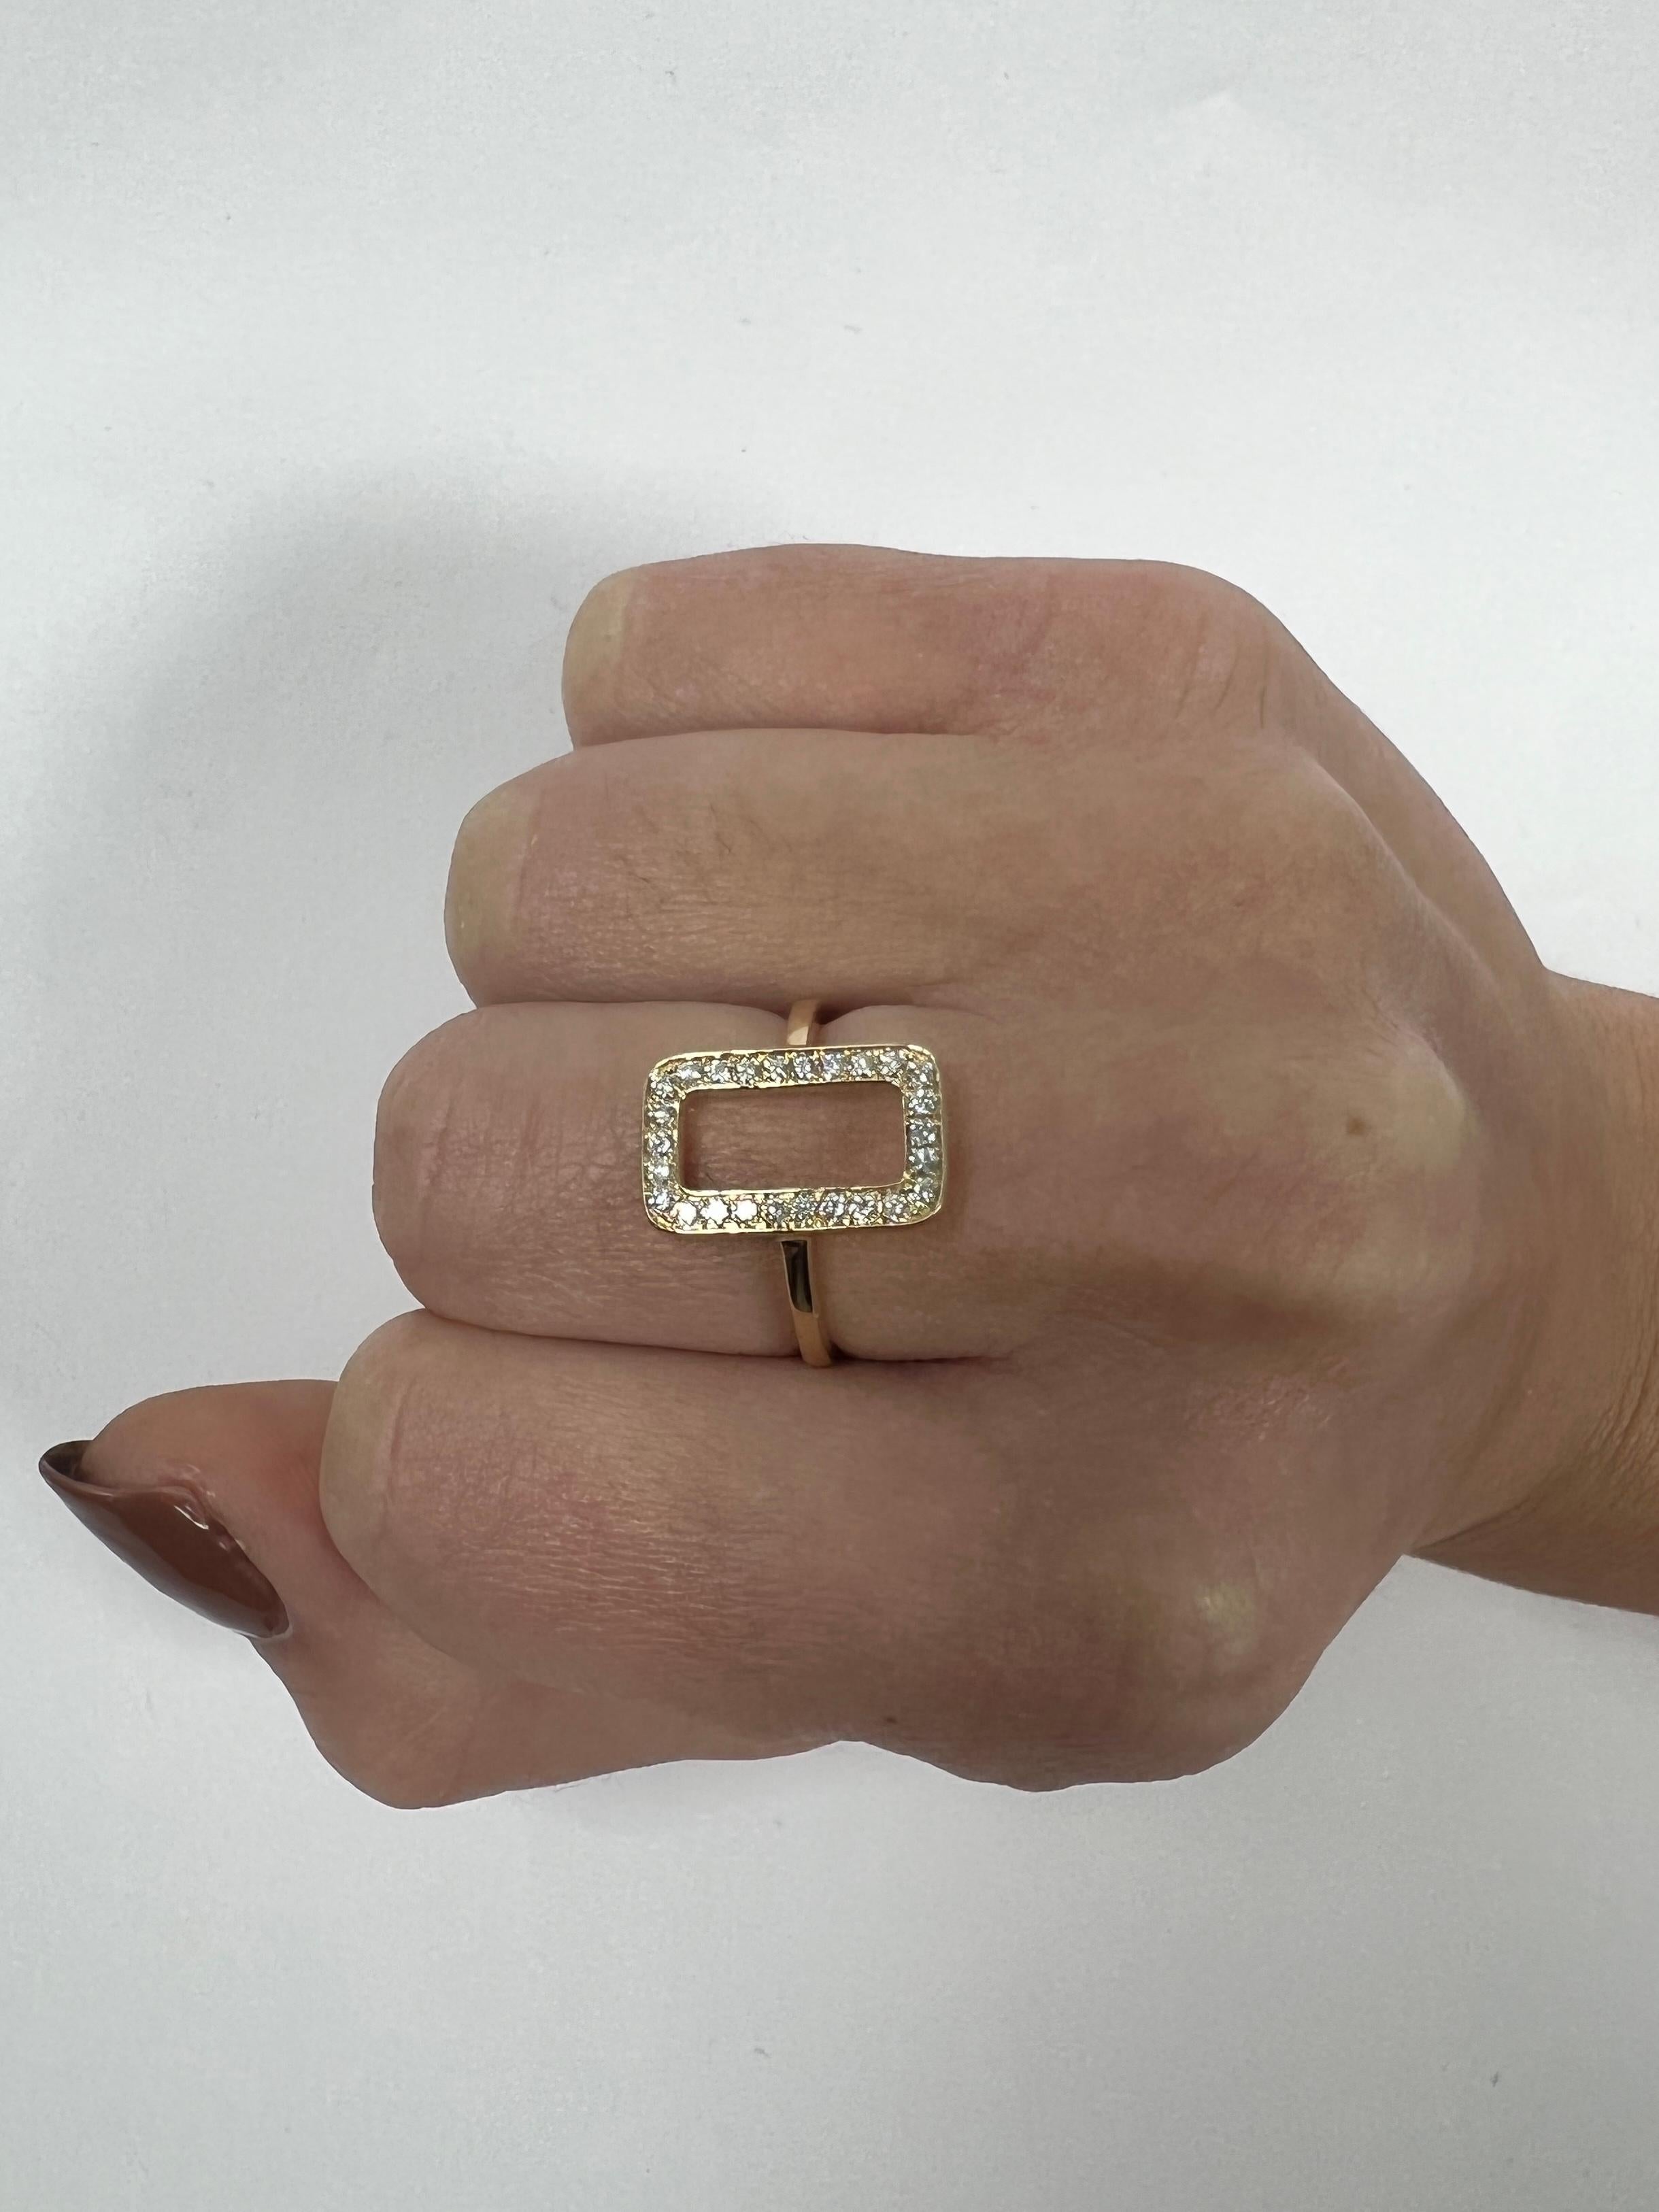 Brilliant Cut Yellow Gold Diamond Ring For Sale